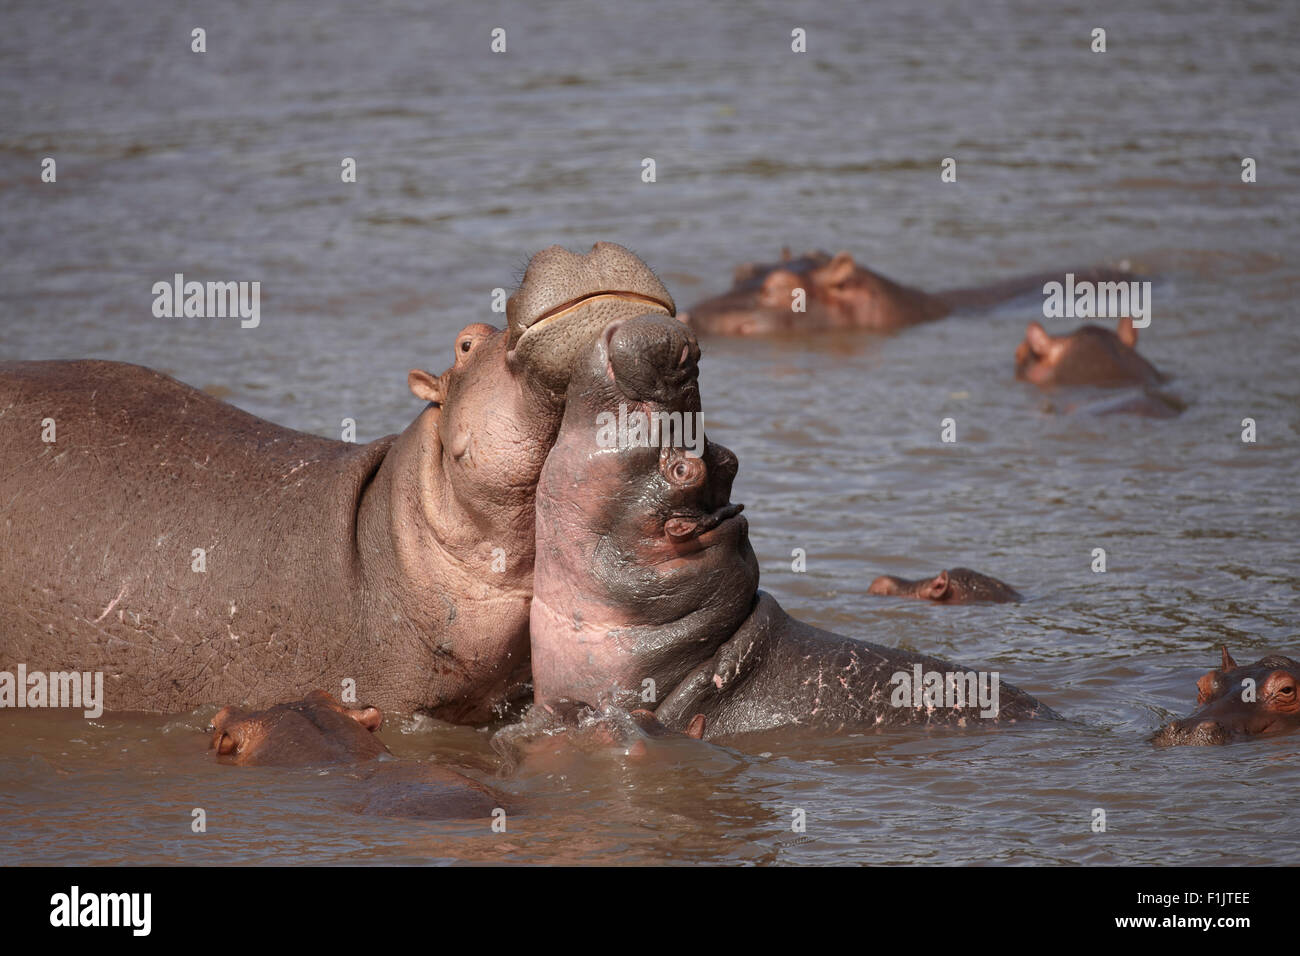 Hippo in the water, Singita Grumeti, Tanzania Stock Photo